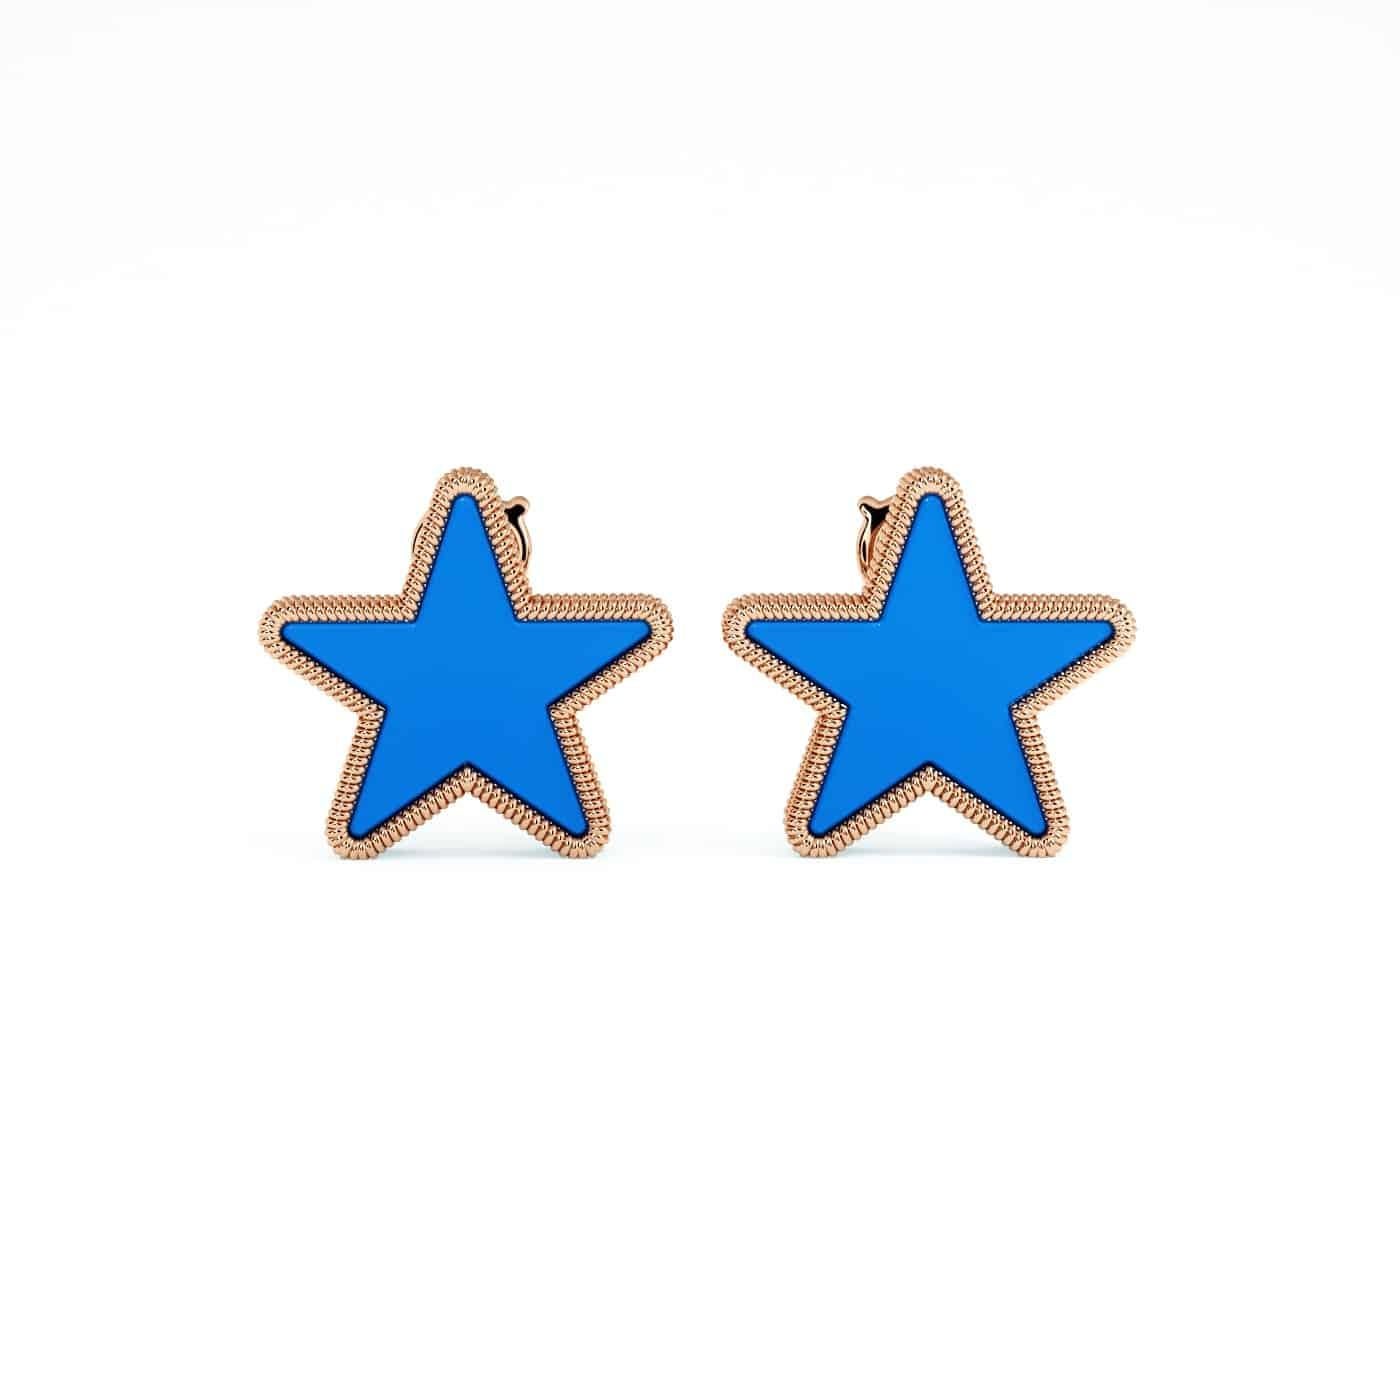 Mixed Cut Modern Blue Agate Star Earrings Set in 18K Gold For Sale